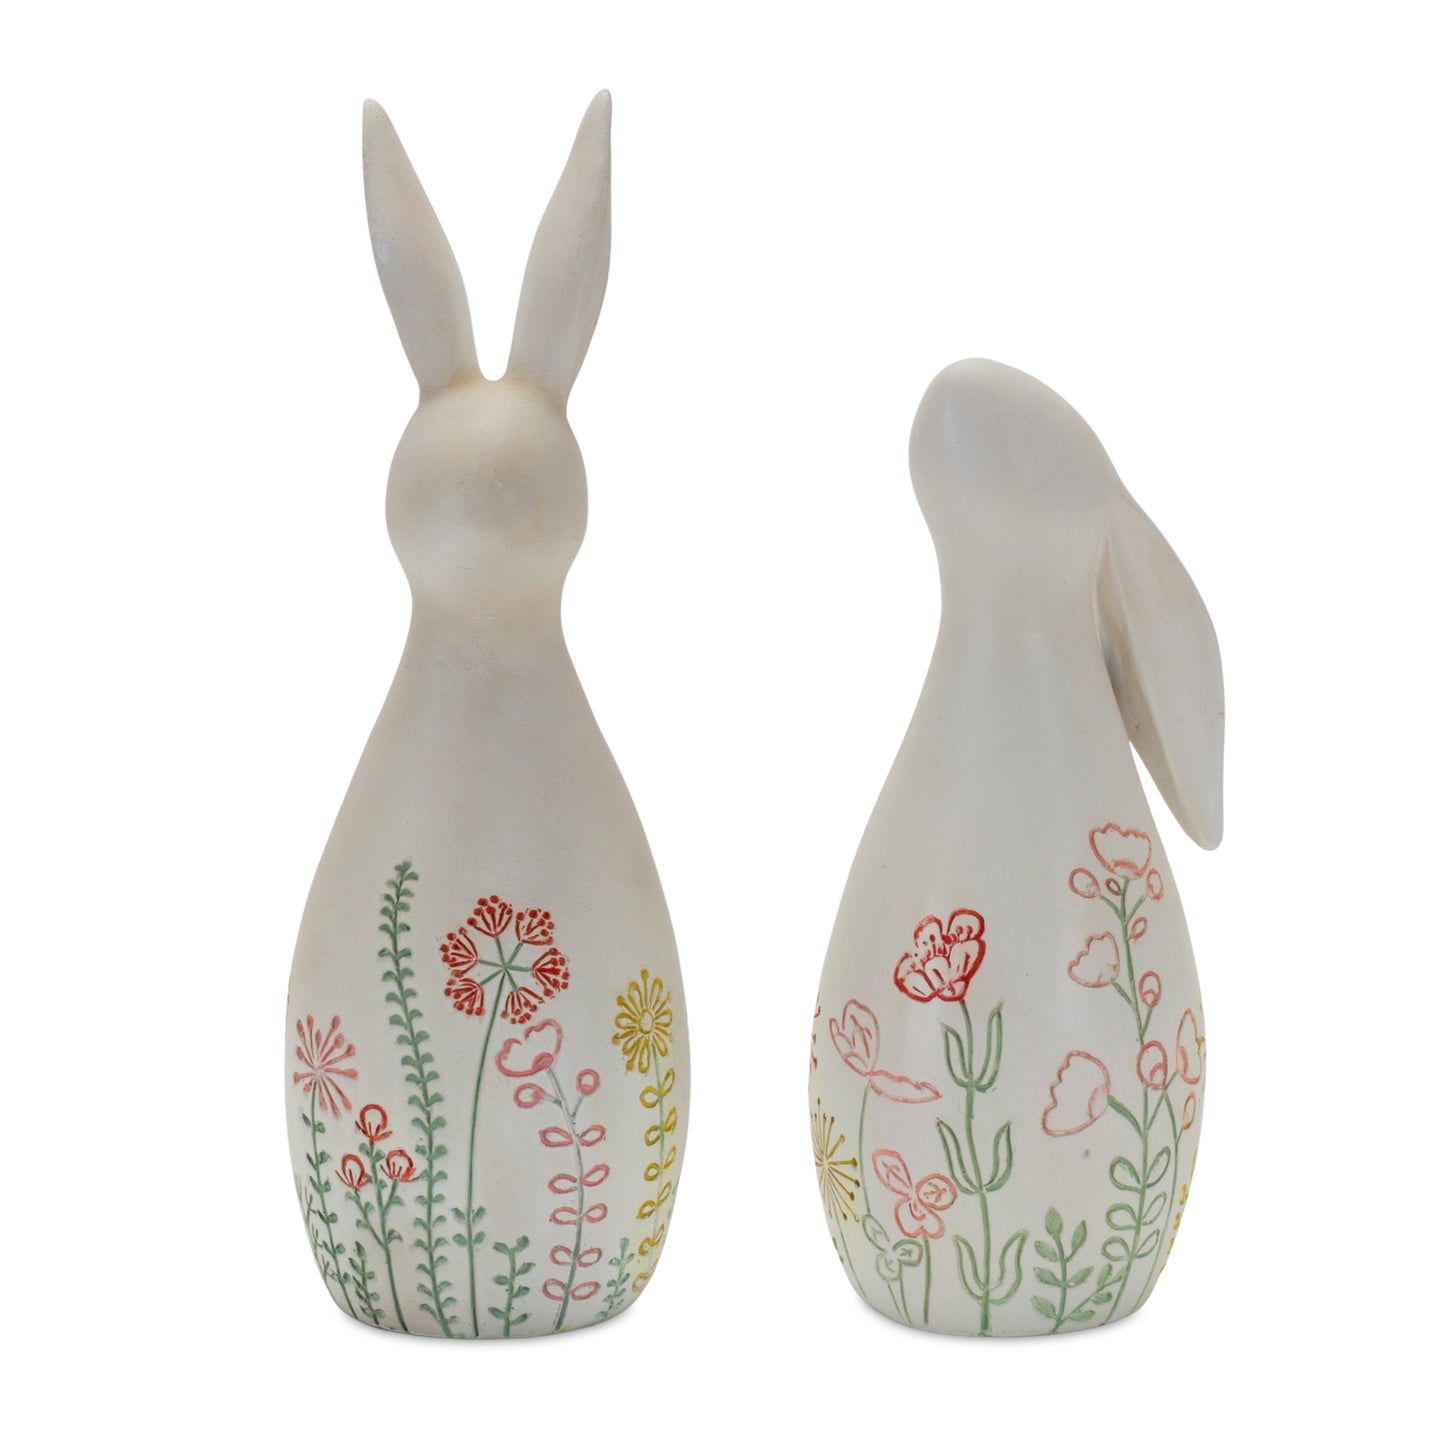 Pair Of Floral Rabbit Figurines